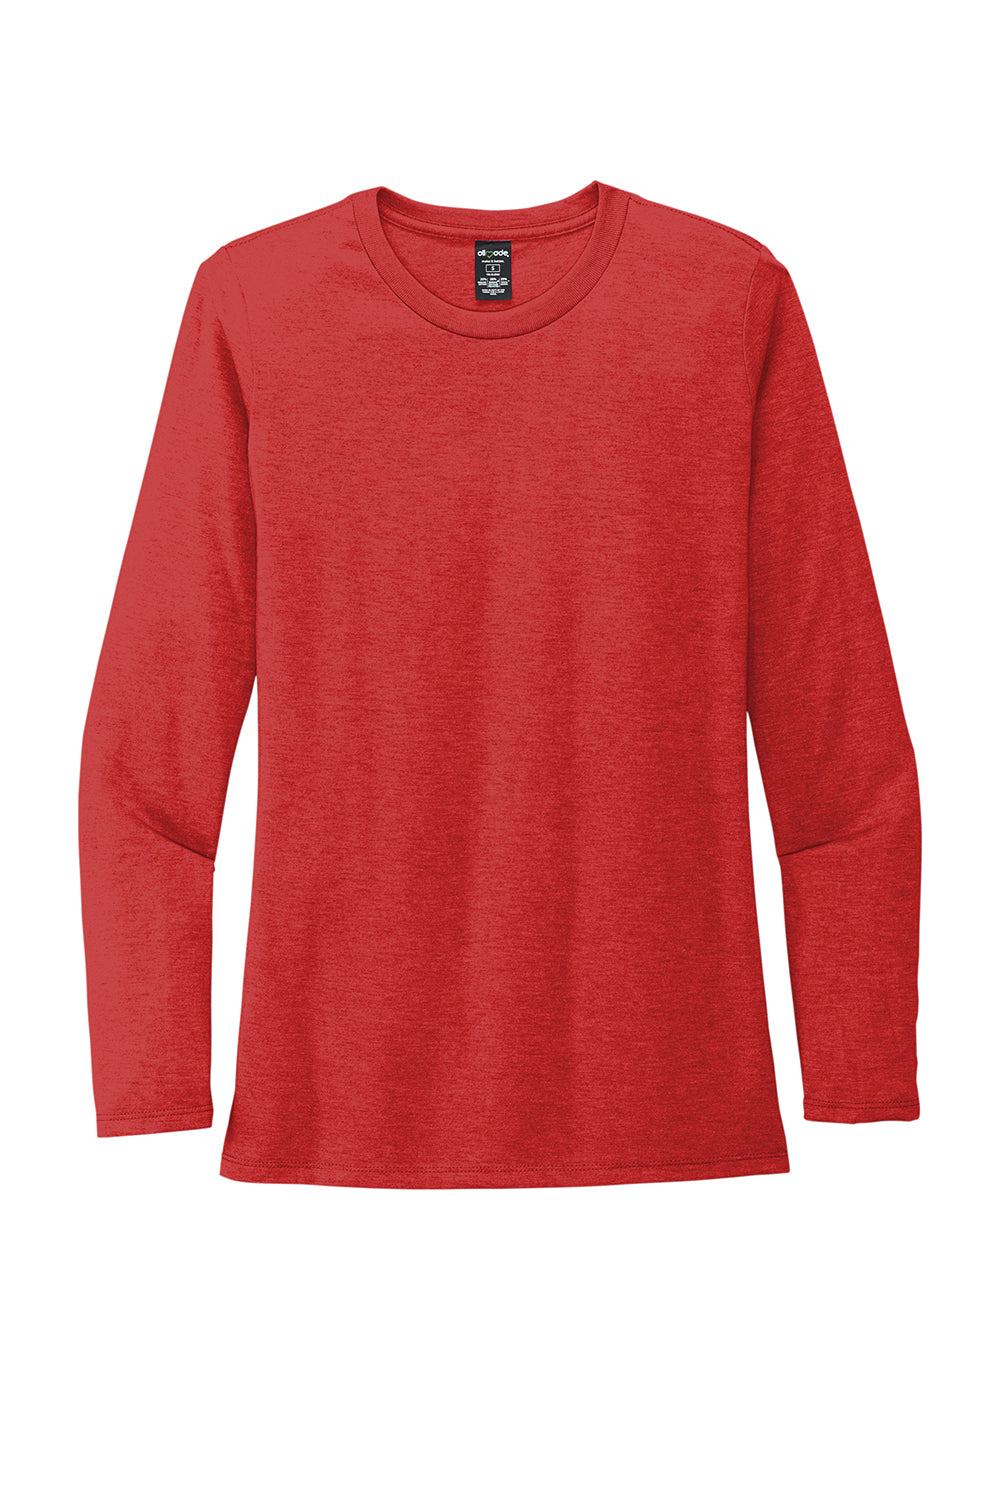 Allmade AL6008 Womens Long Sleeve Crewneck T-Shirt Rise Up Red Flat Front